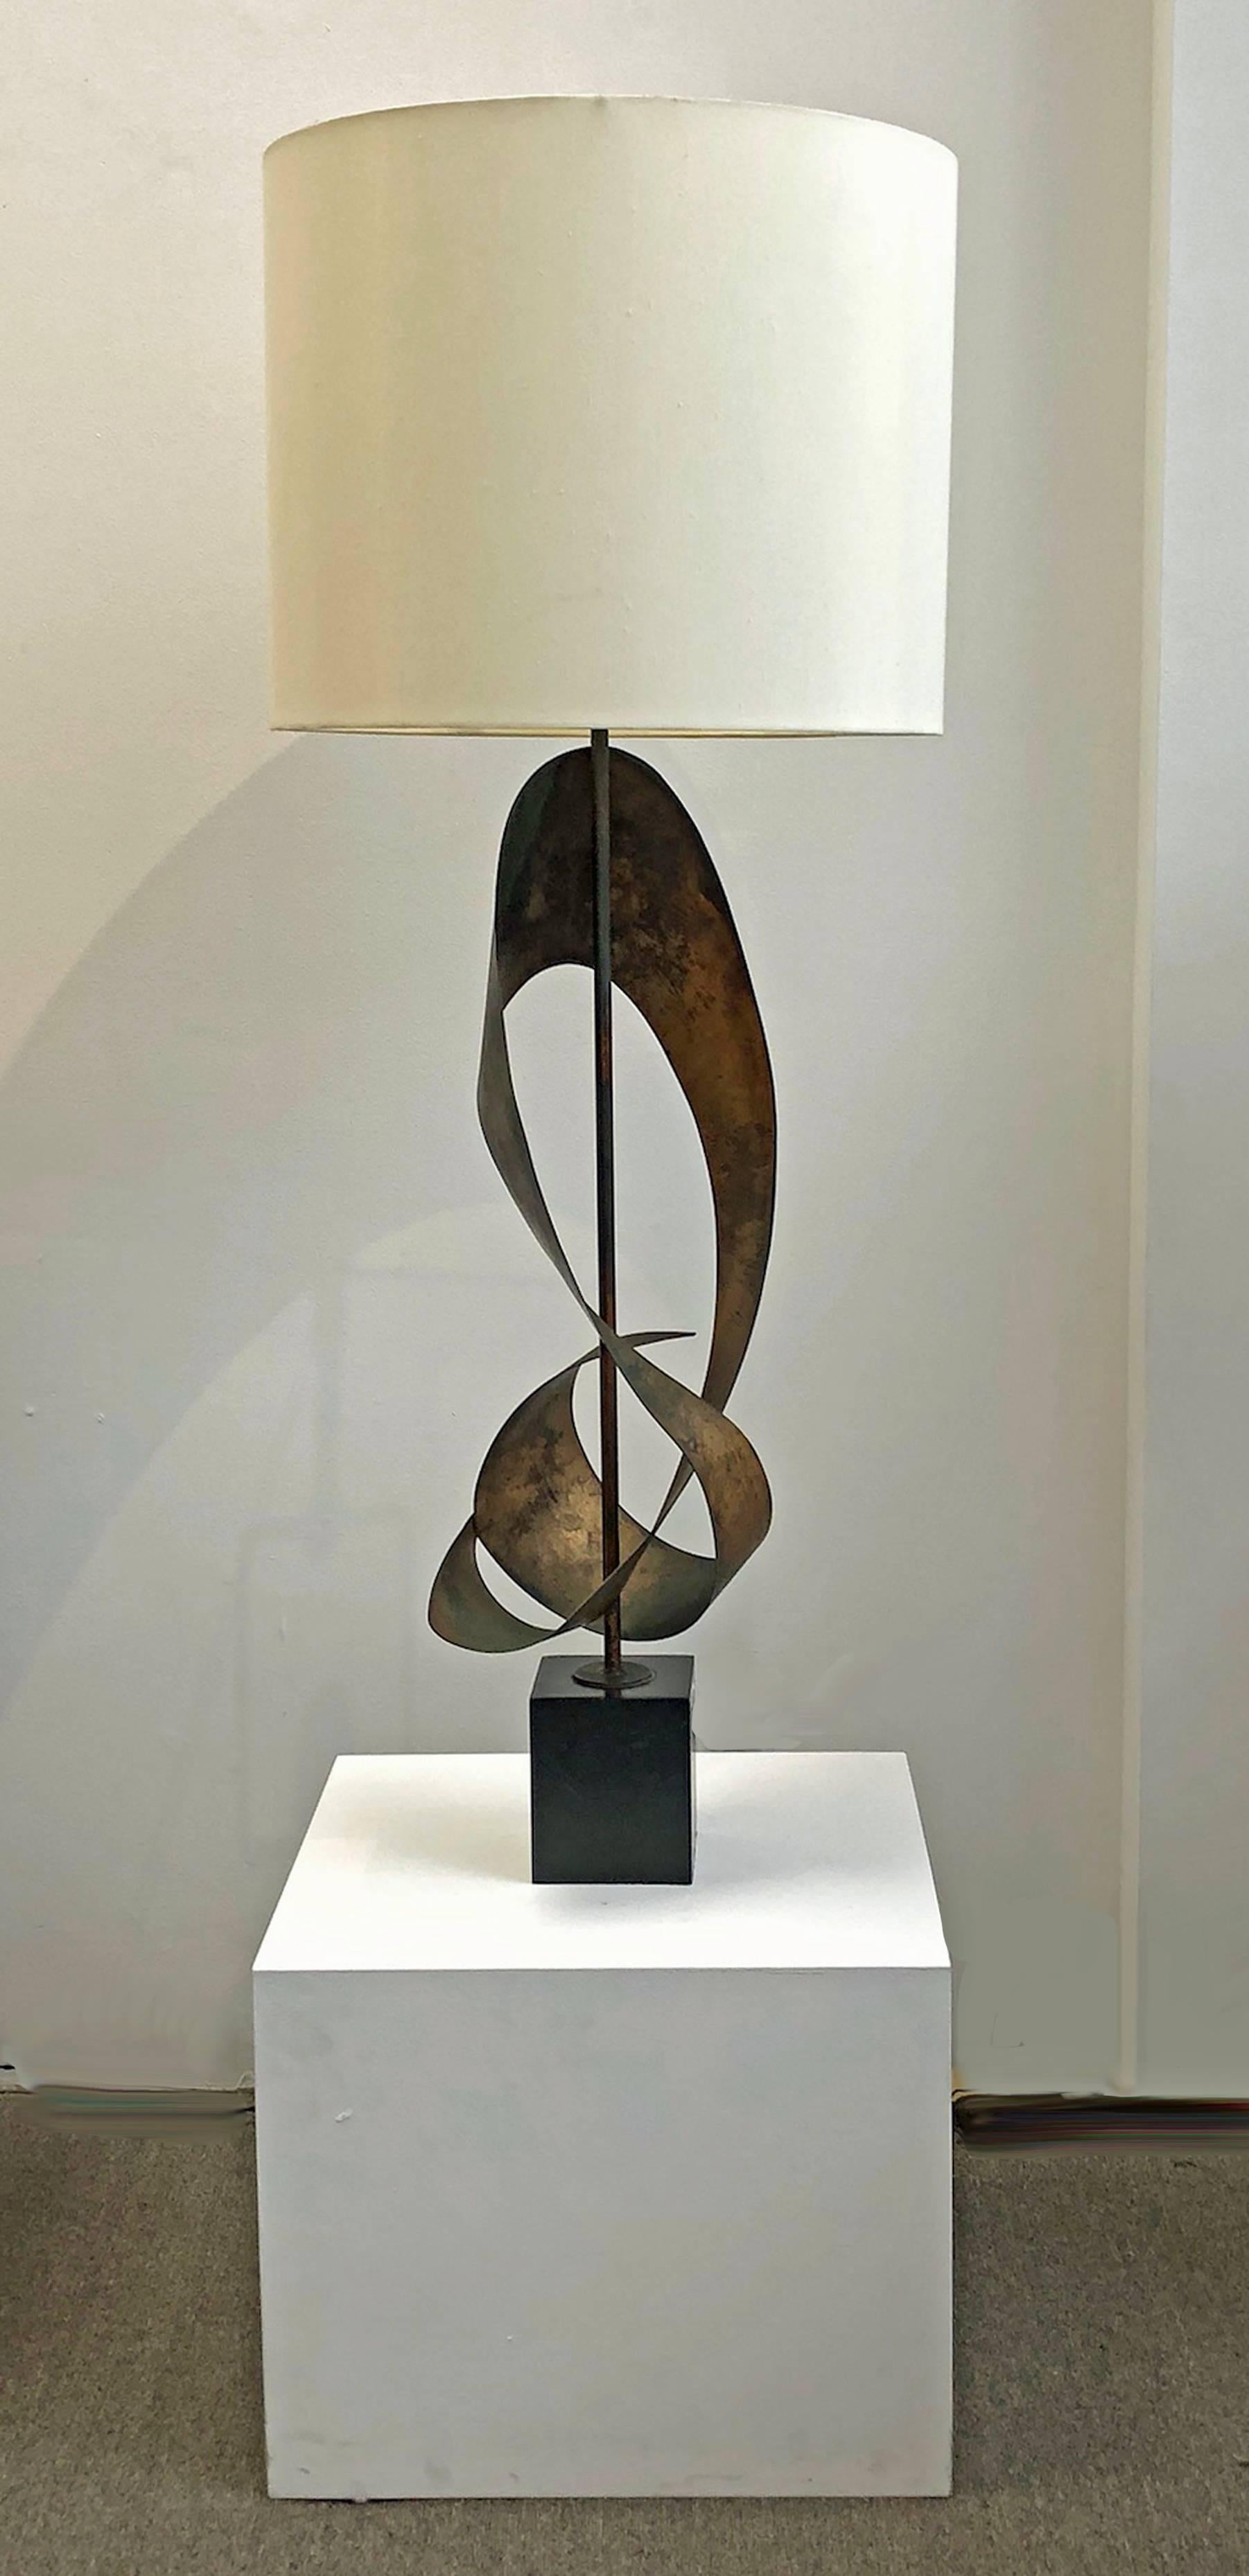 Brutalist sculpture table lamp designed by Harry Balmer for Laurel Lamps. As shown, measures 51